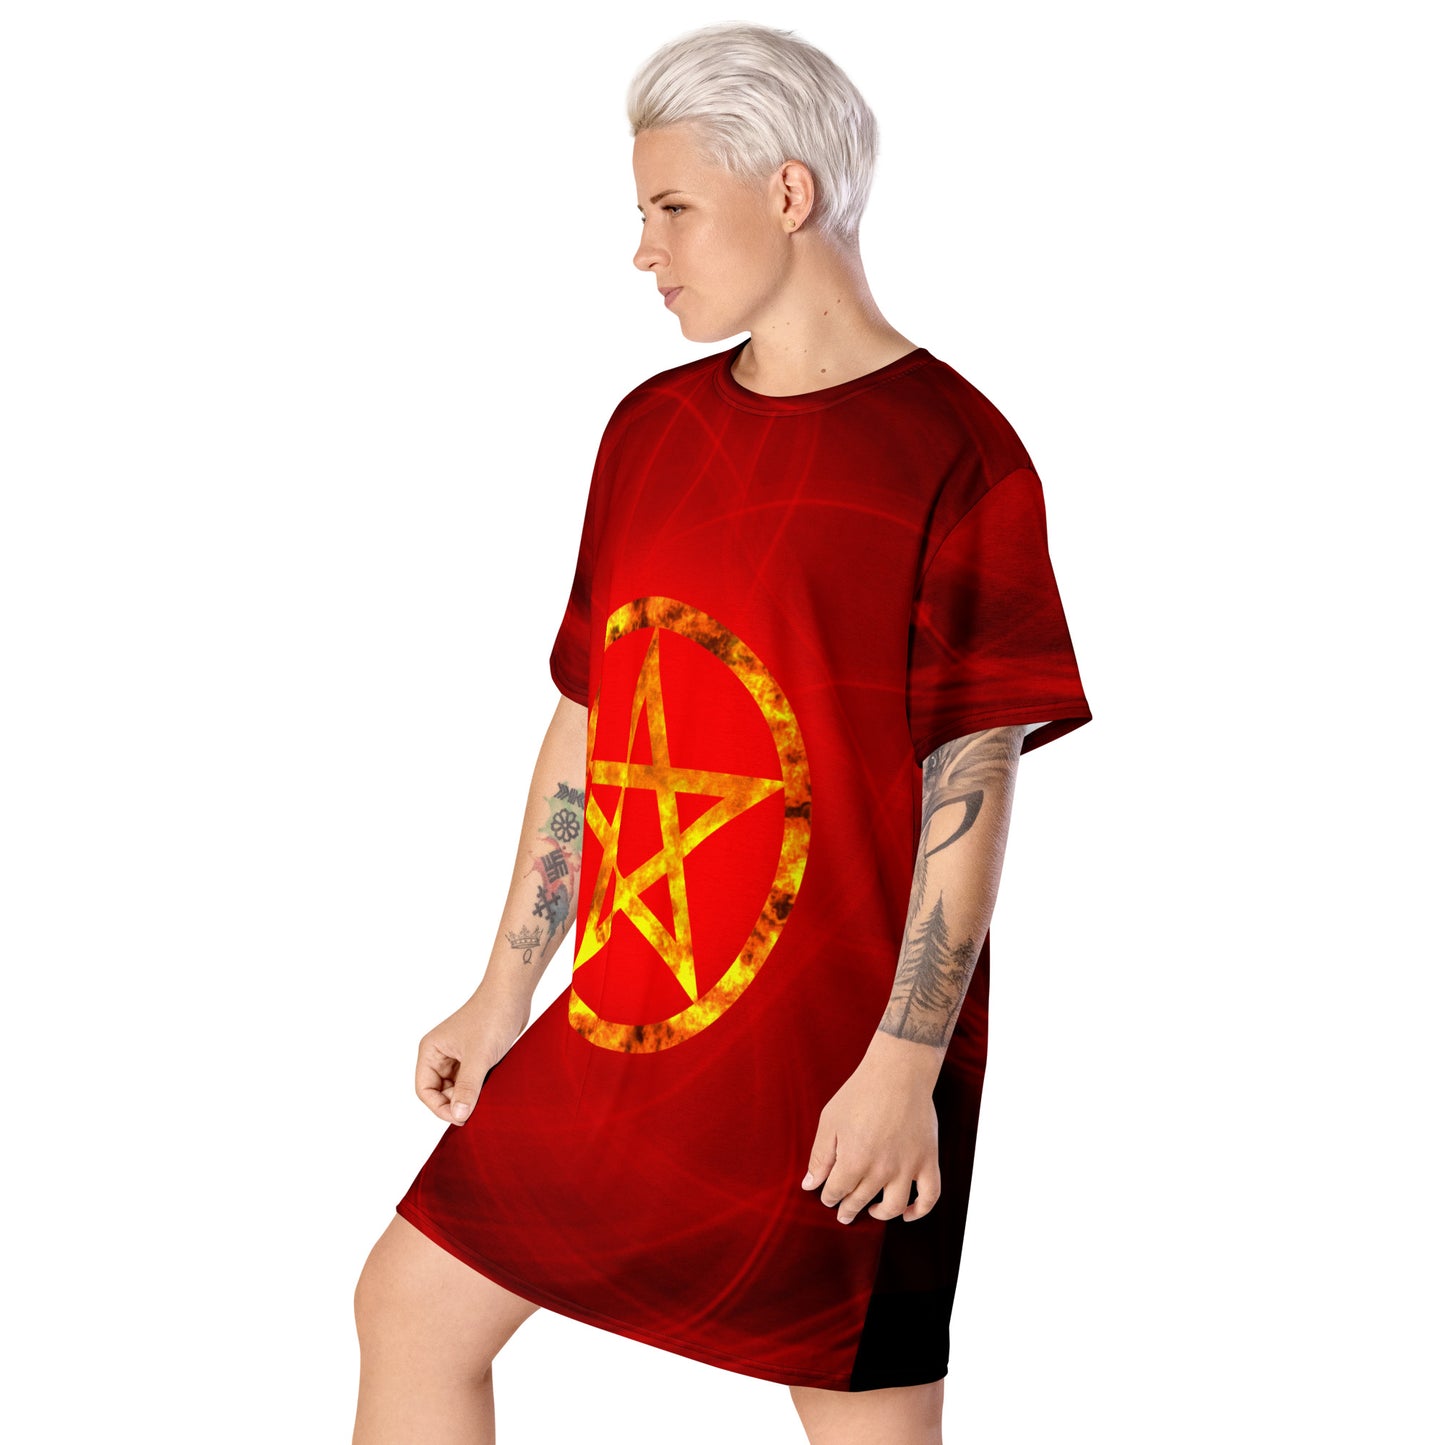 Magic Red Pentagram T-shirt dress